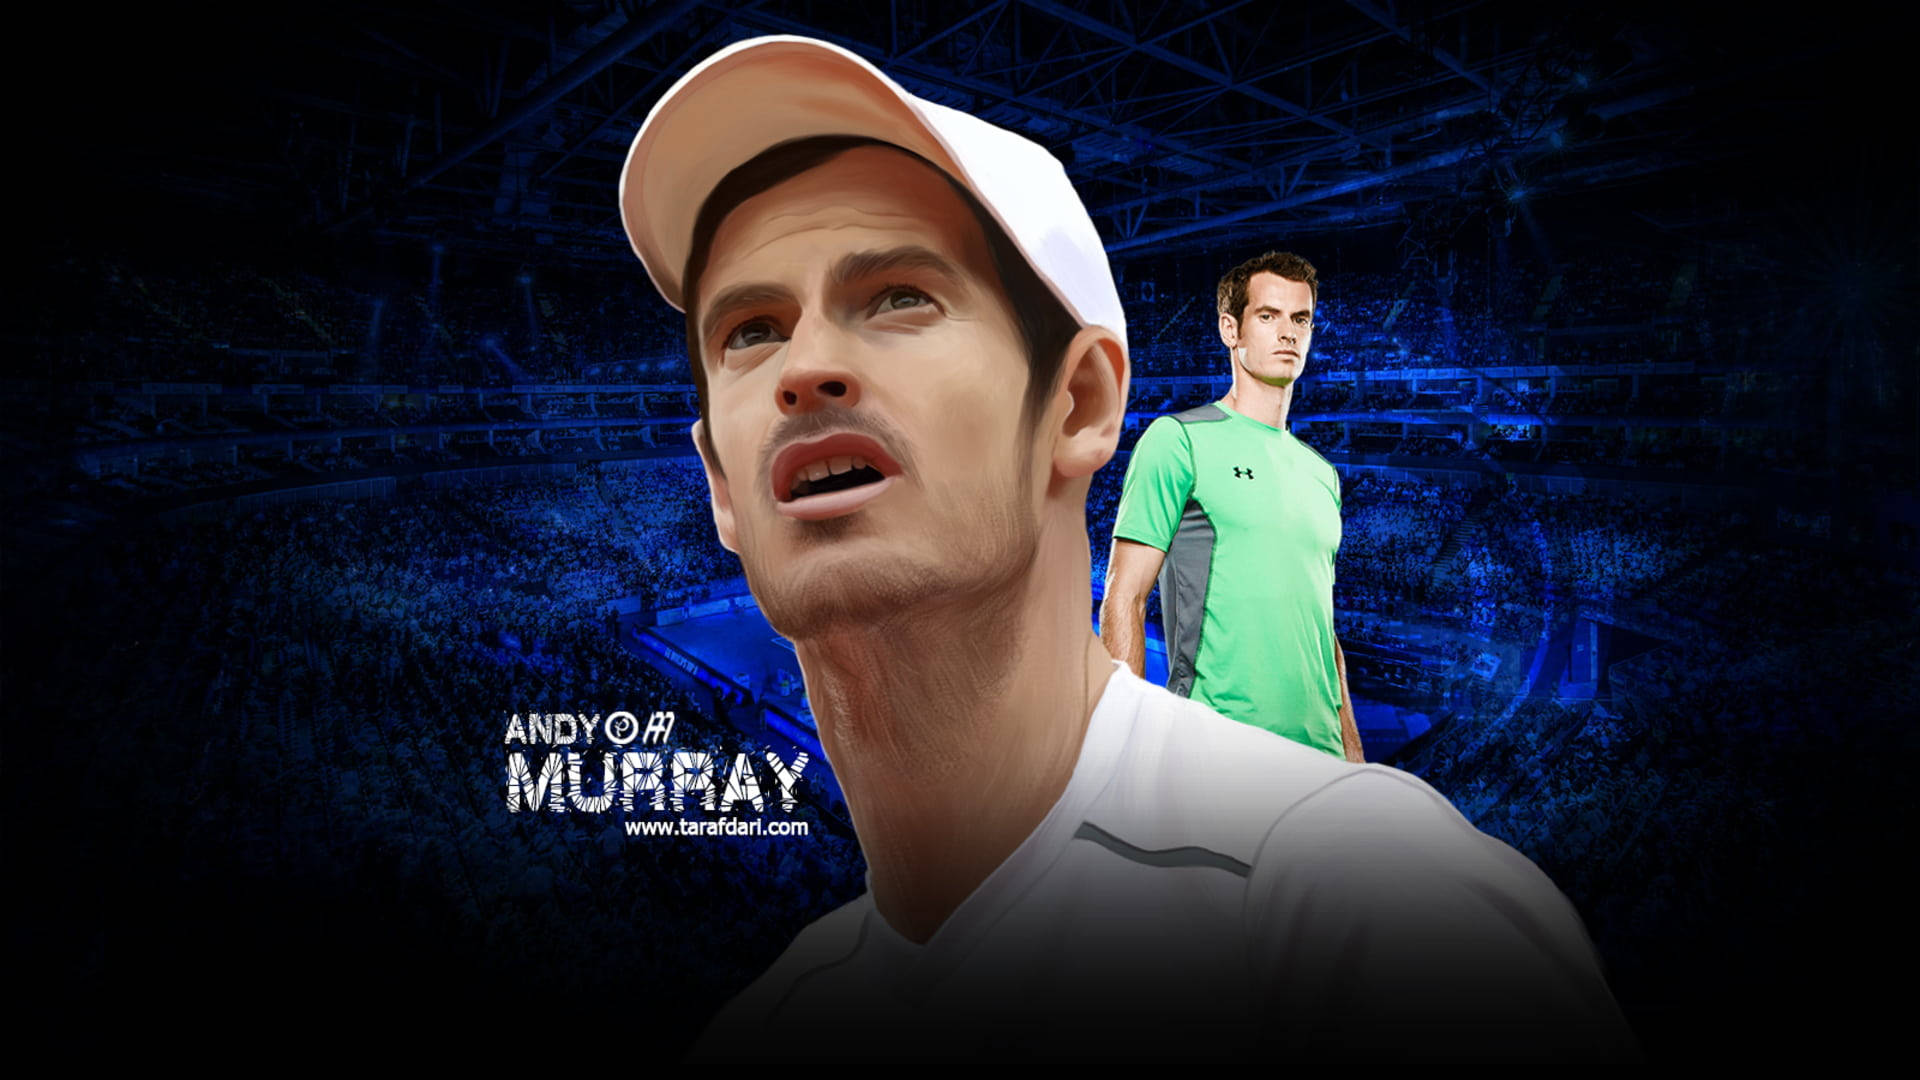 Fanart Genial De Andy Murray Fondo de pantalla